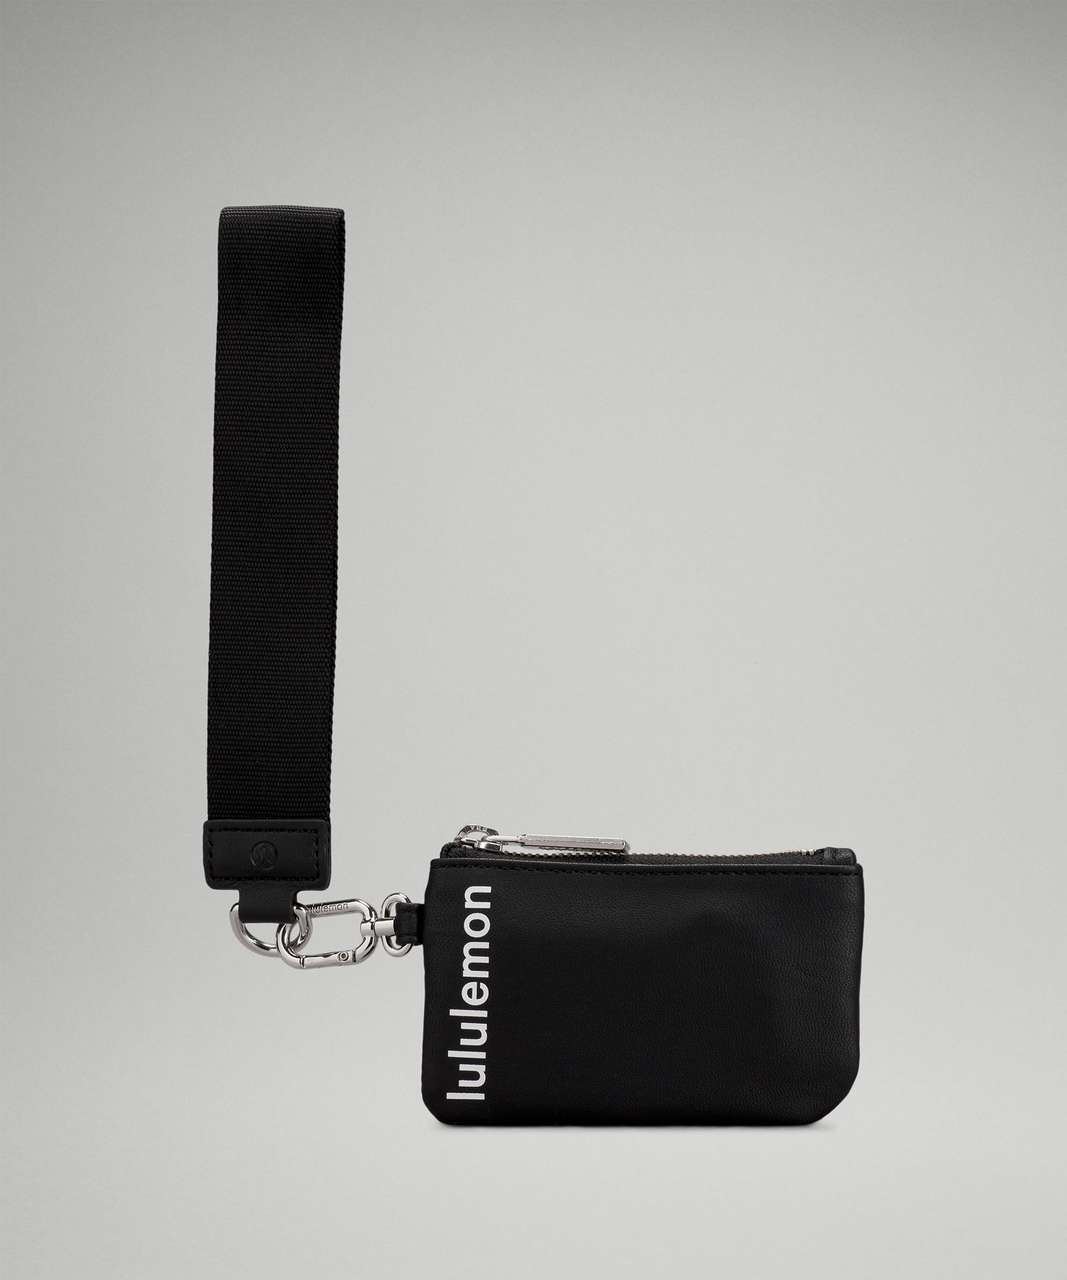 Lululemon Dual Pouch Wristlet - Black (First Release)